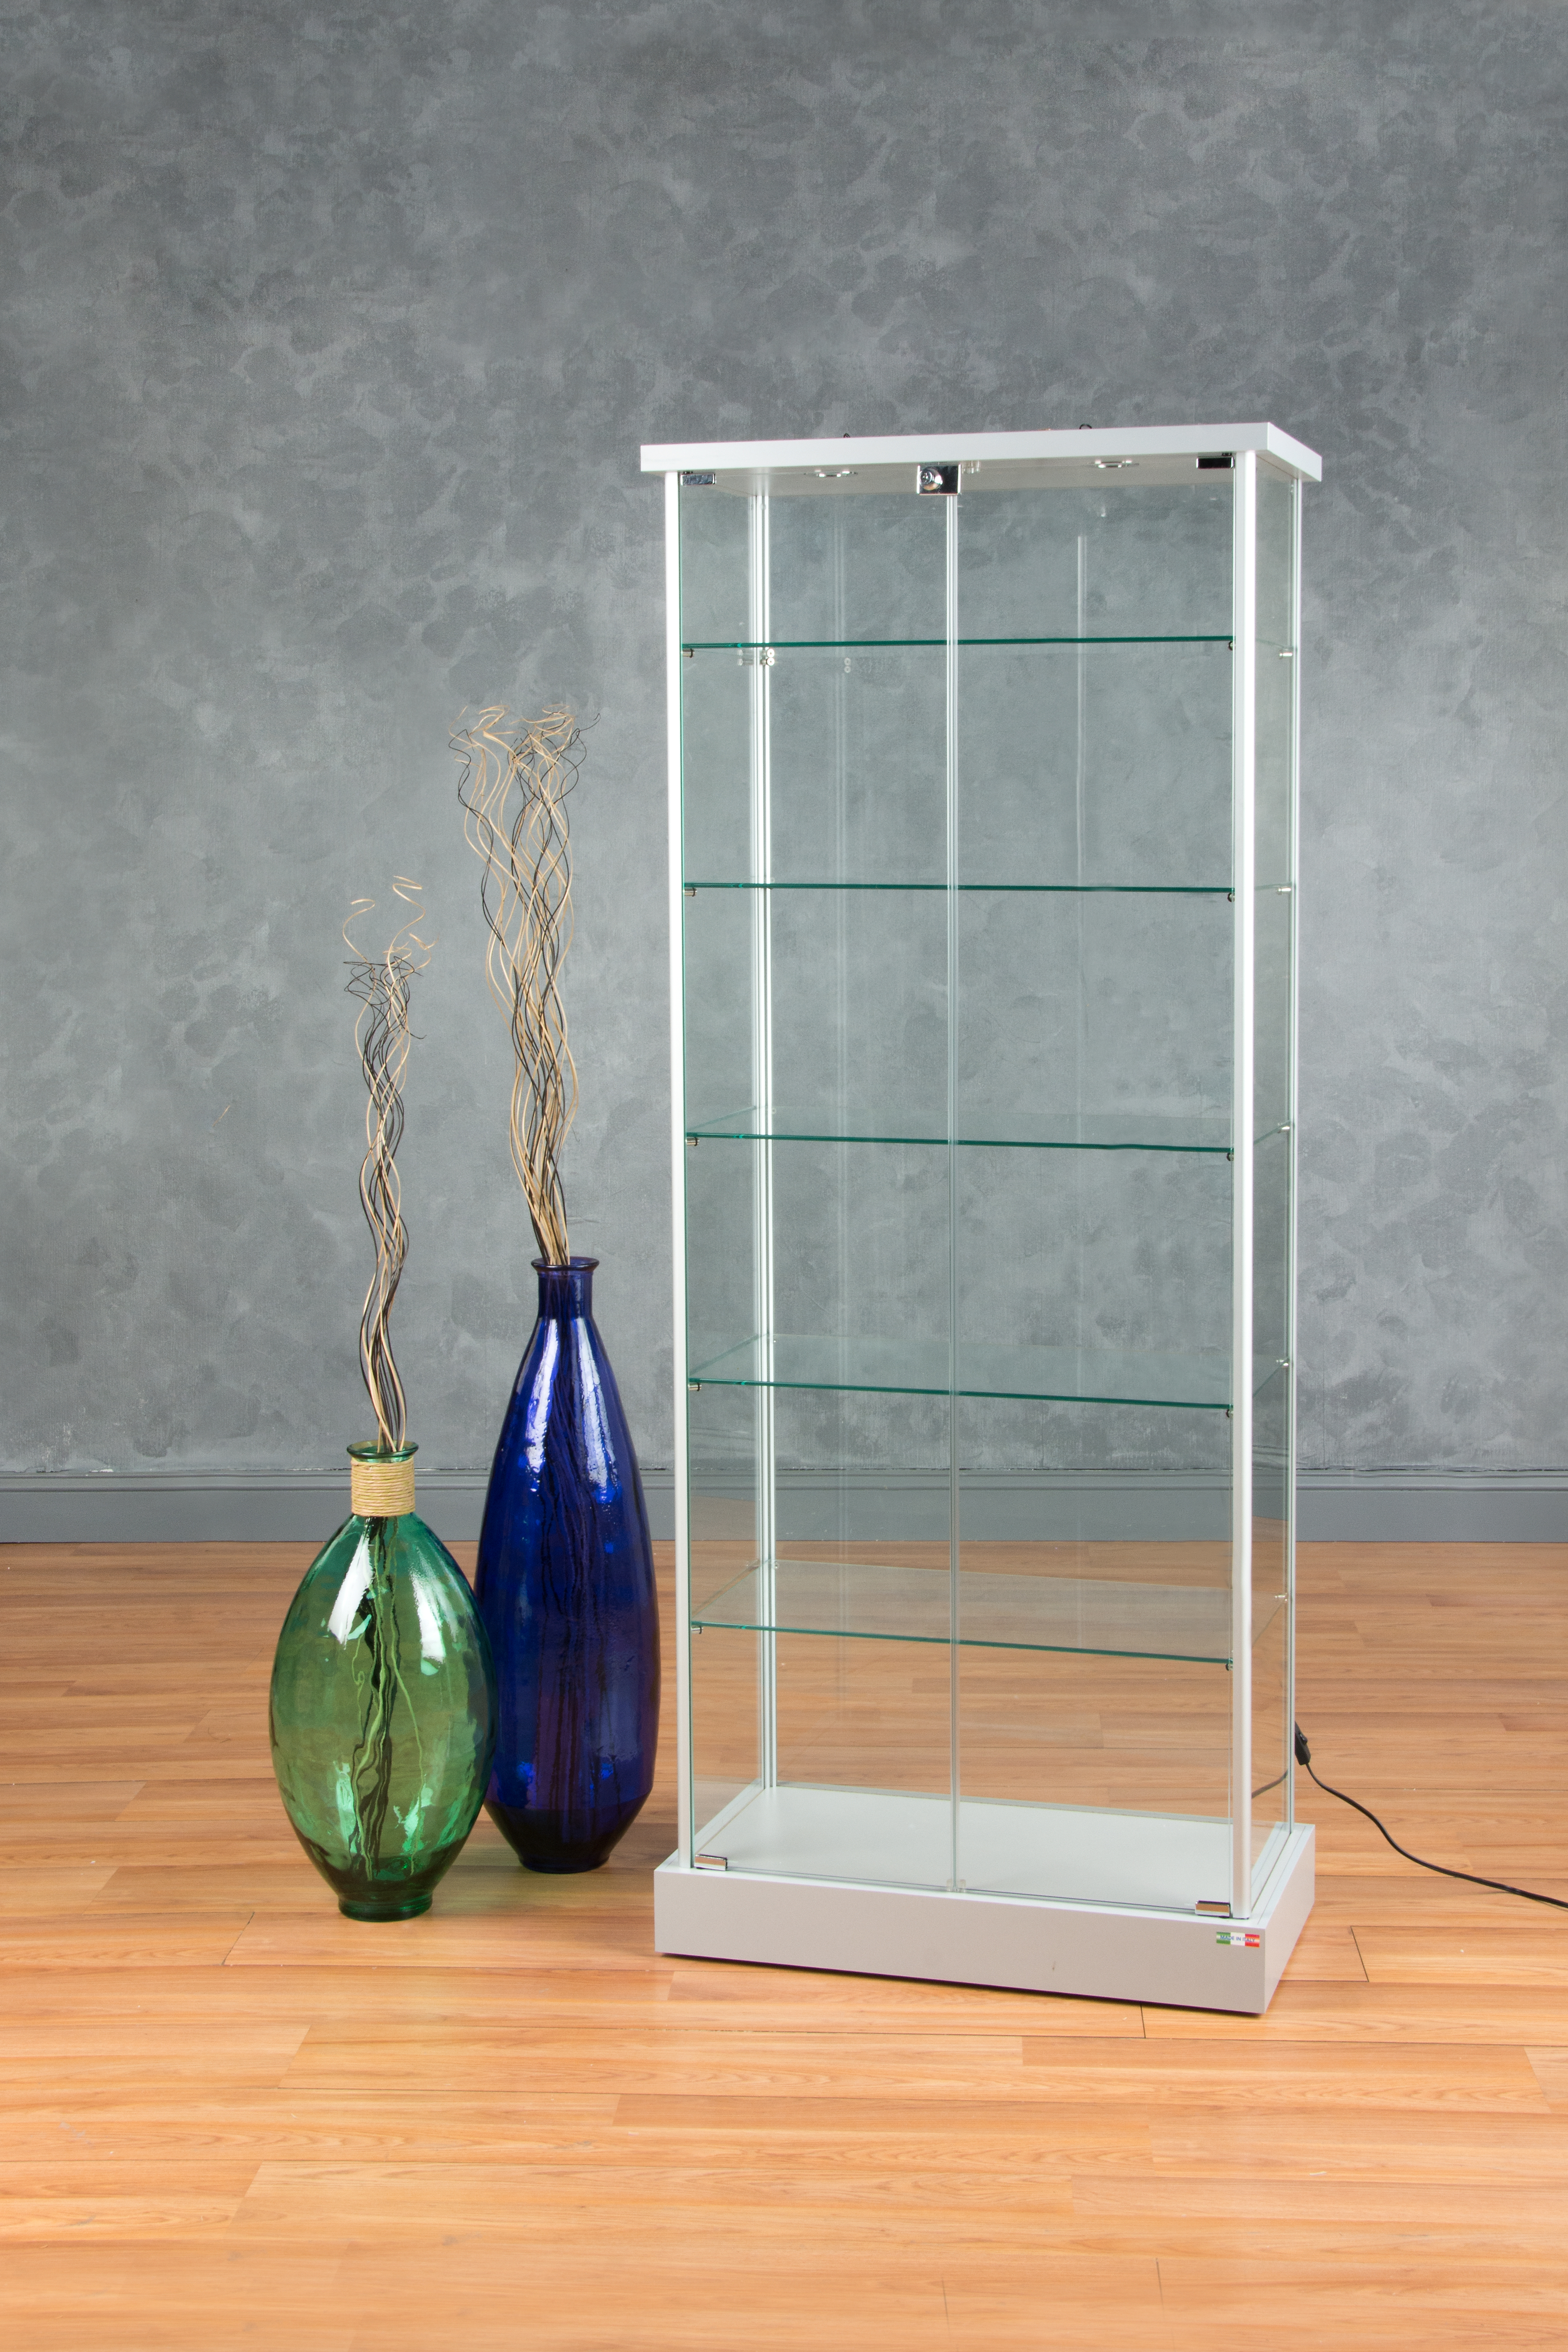 FixtureDisplays® 40X16.5X78 Glass Showcase Display Case with LED Lights  5-Tier Shelf Floor Stand 119956 